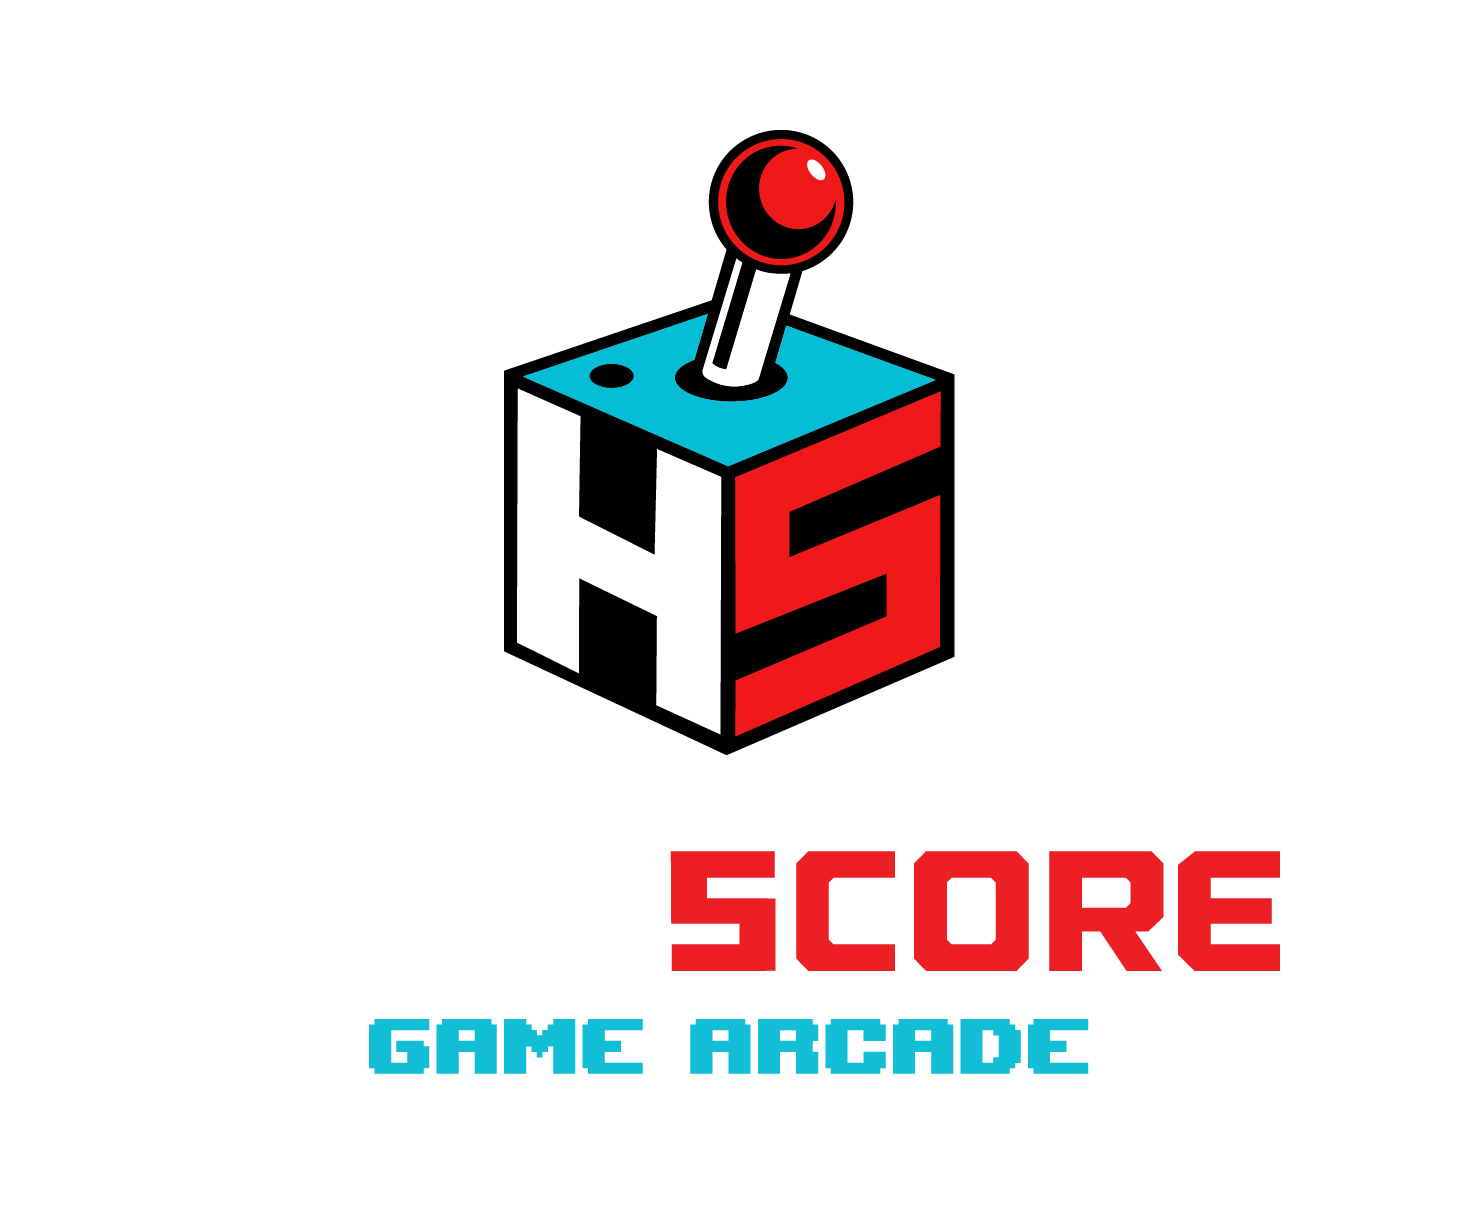 HighScoreGameArcade Logo